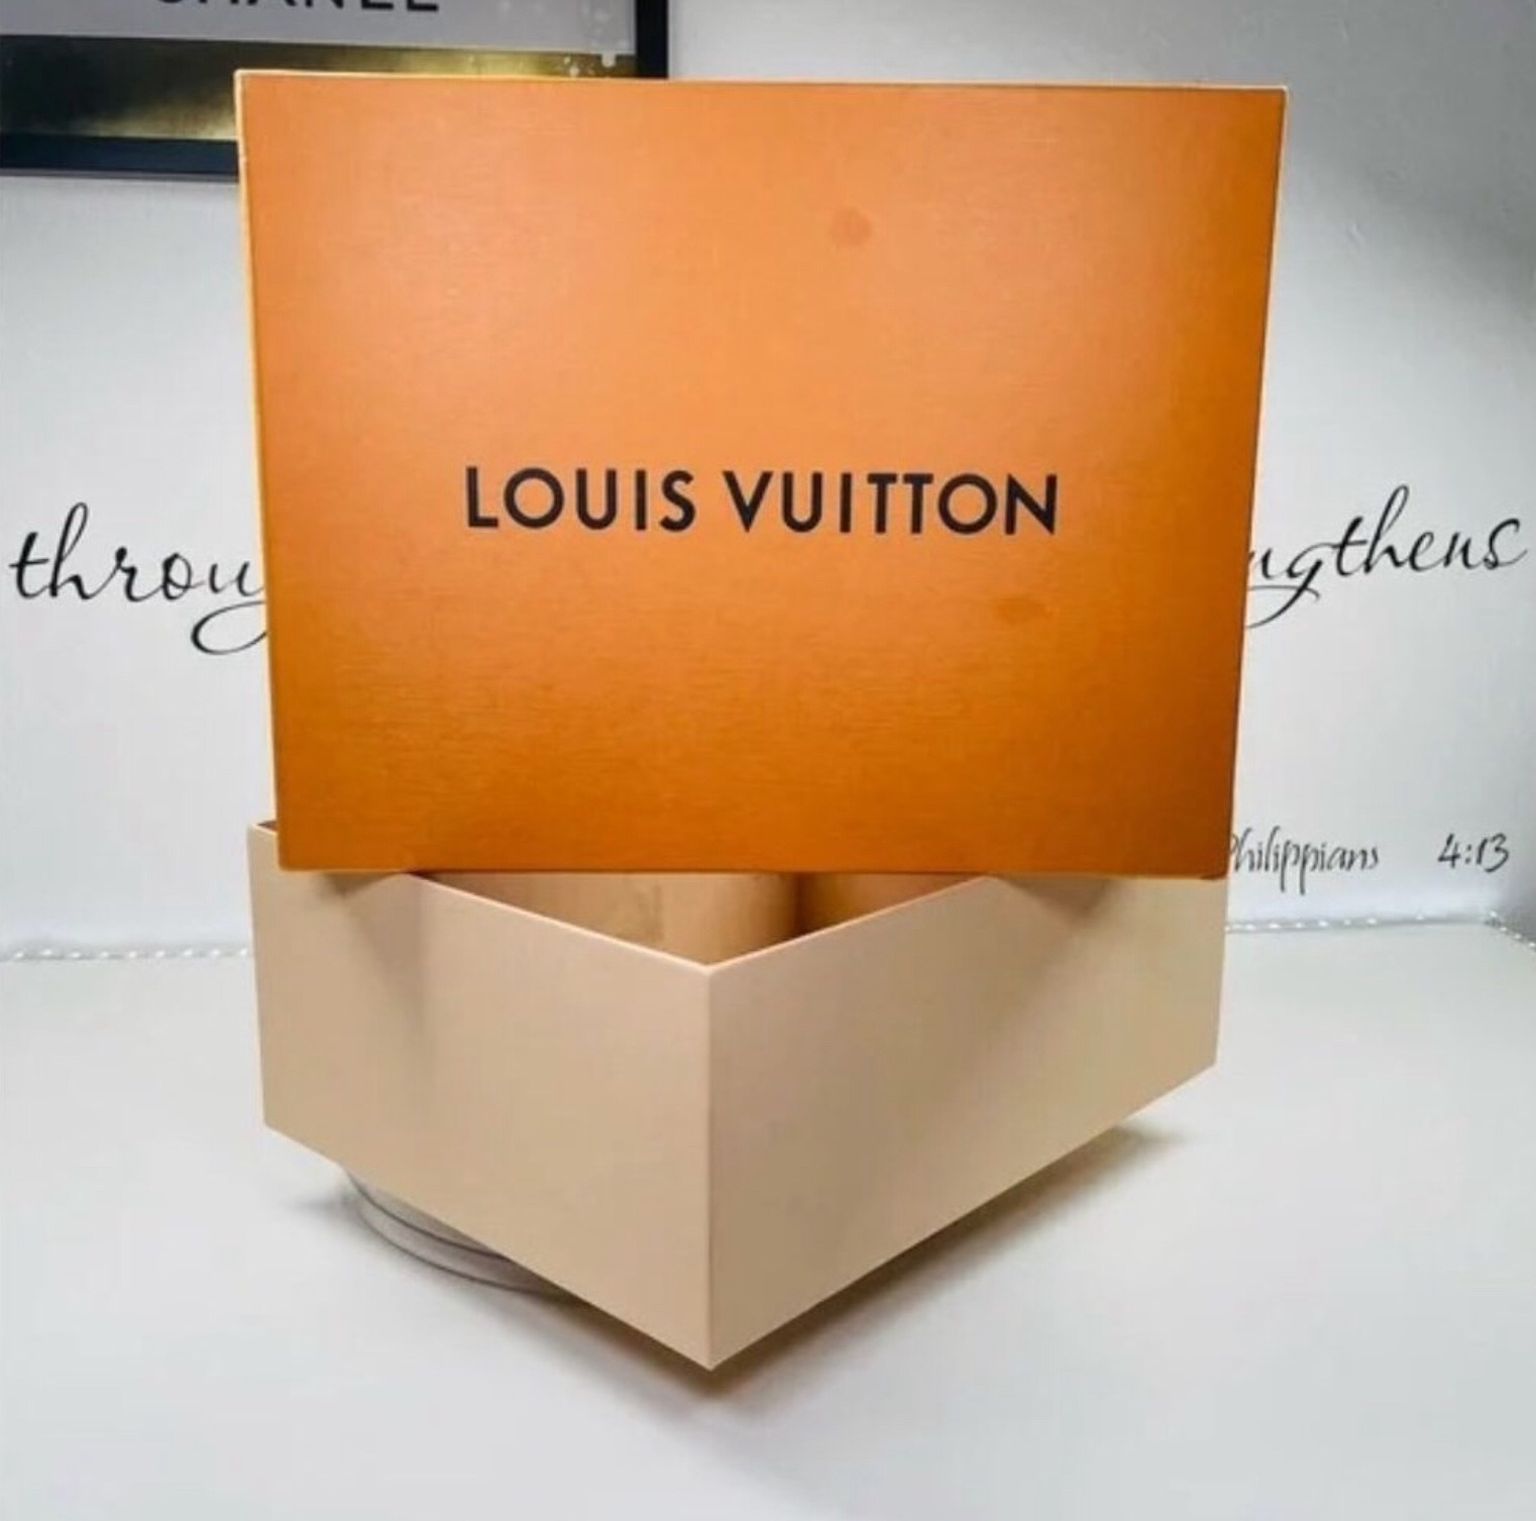 authentic packaging authentic louis vuitton box